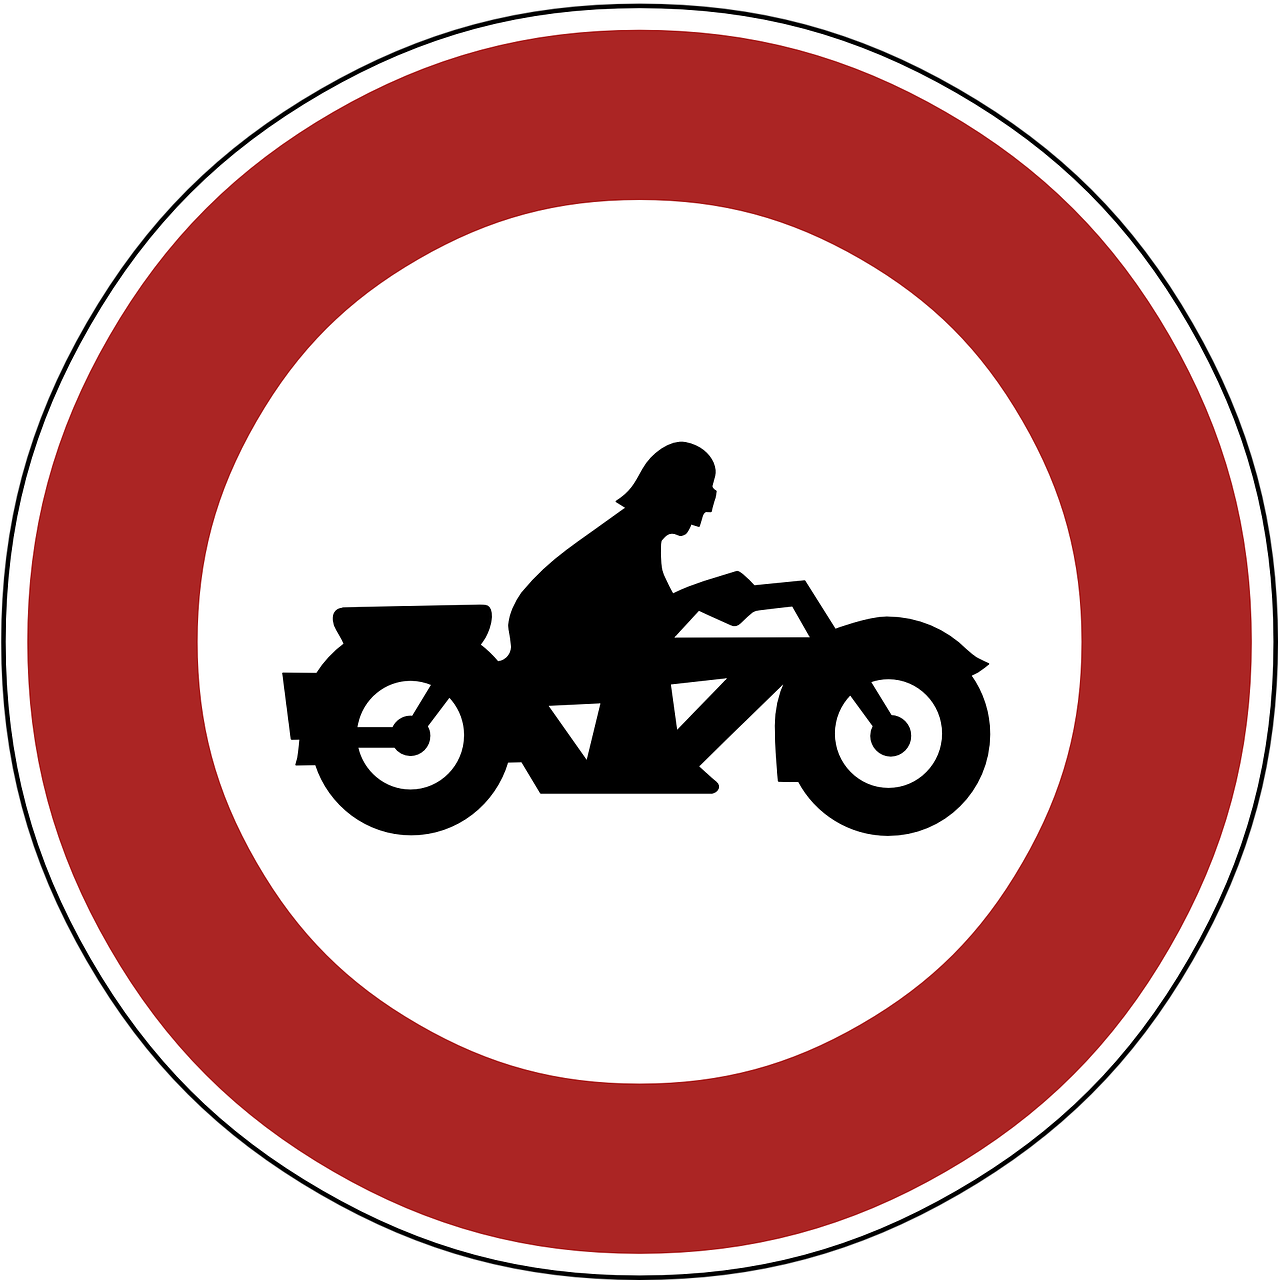 ban motorcycles forbidden free photo